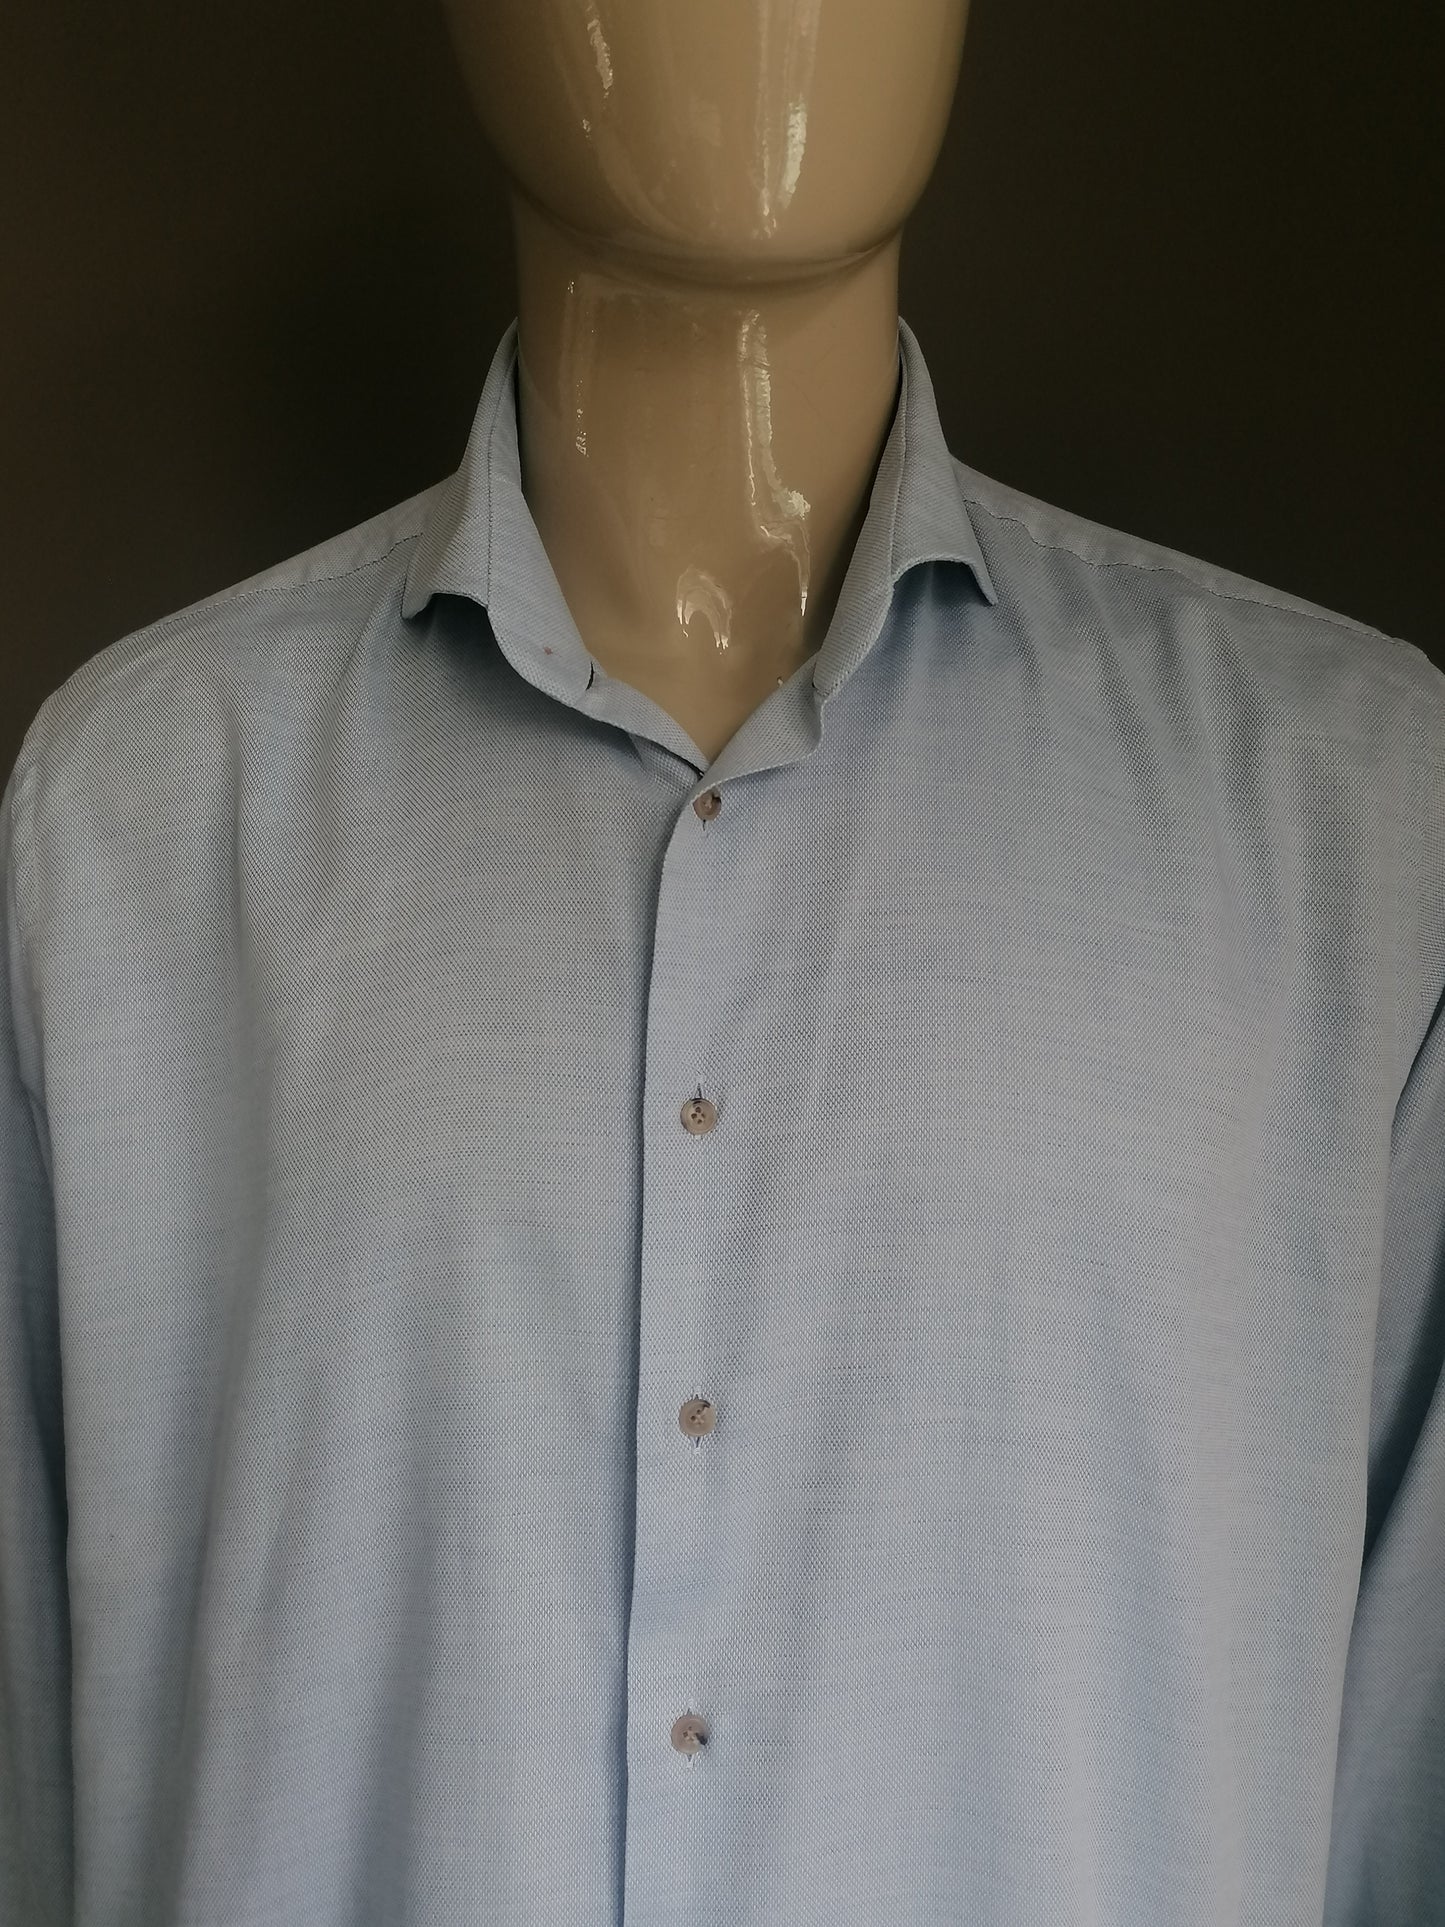 Thomas Maine  overhemd. Blauw gemêleerd. Maat 45 / XXL / 2XL. Tailored Fit.